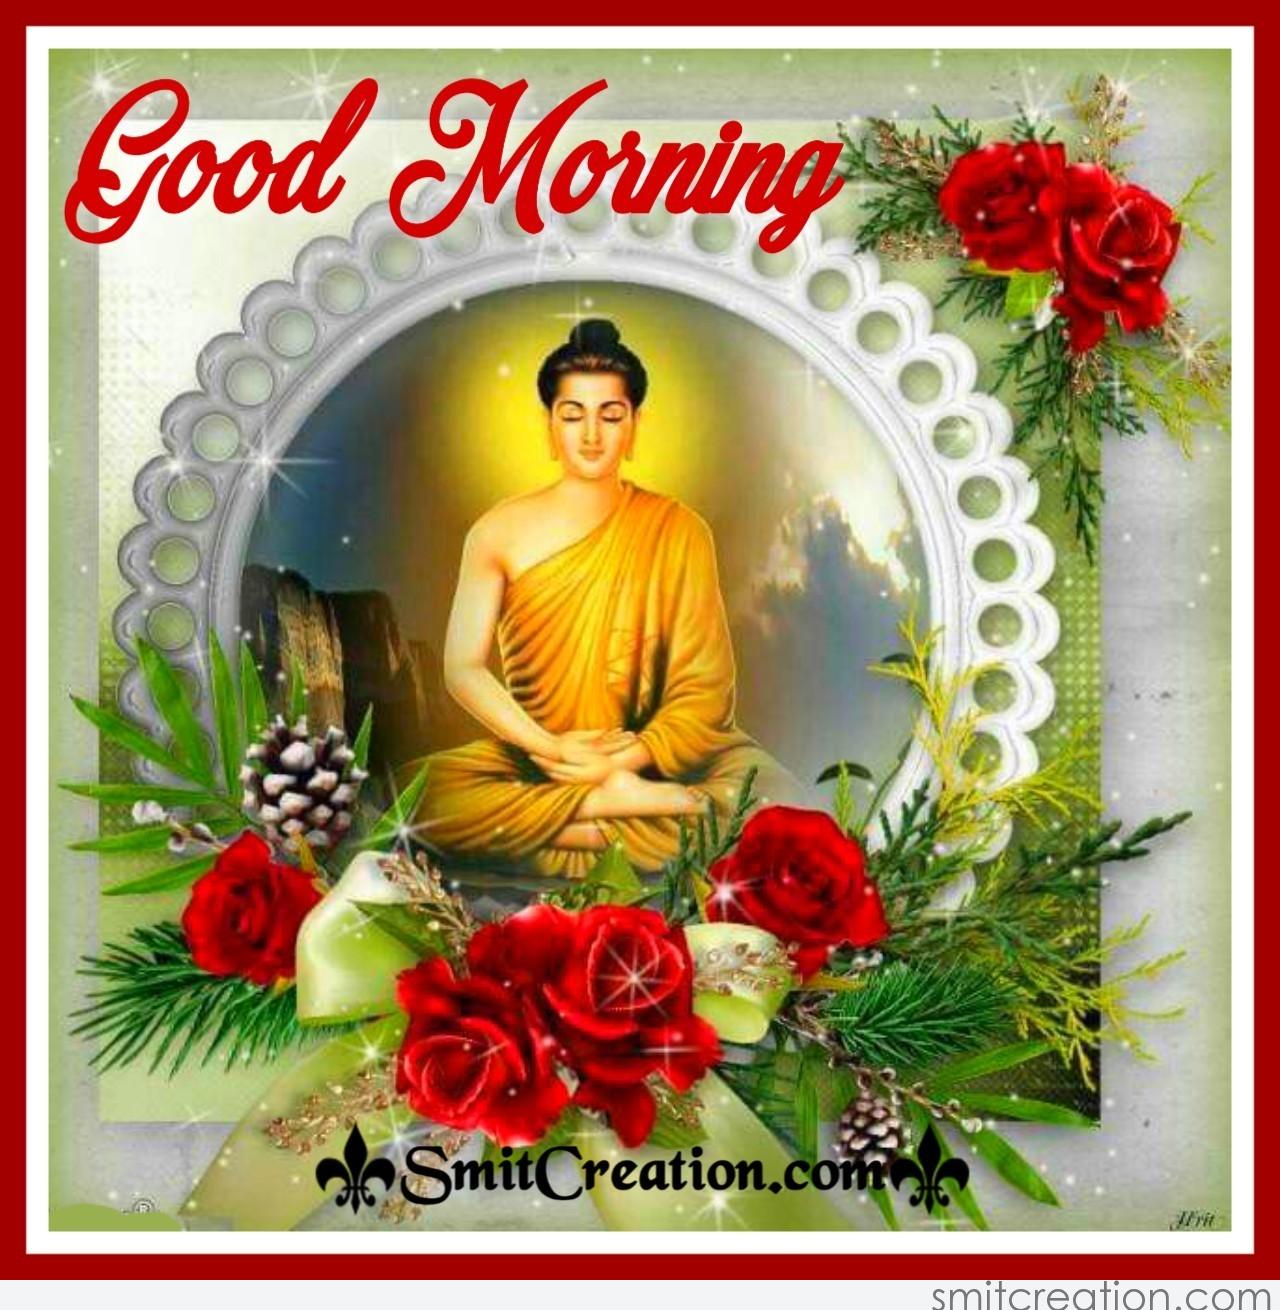 Good Morning Buddha Card - SmitCreation.com